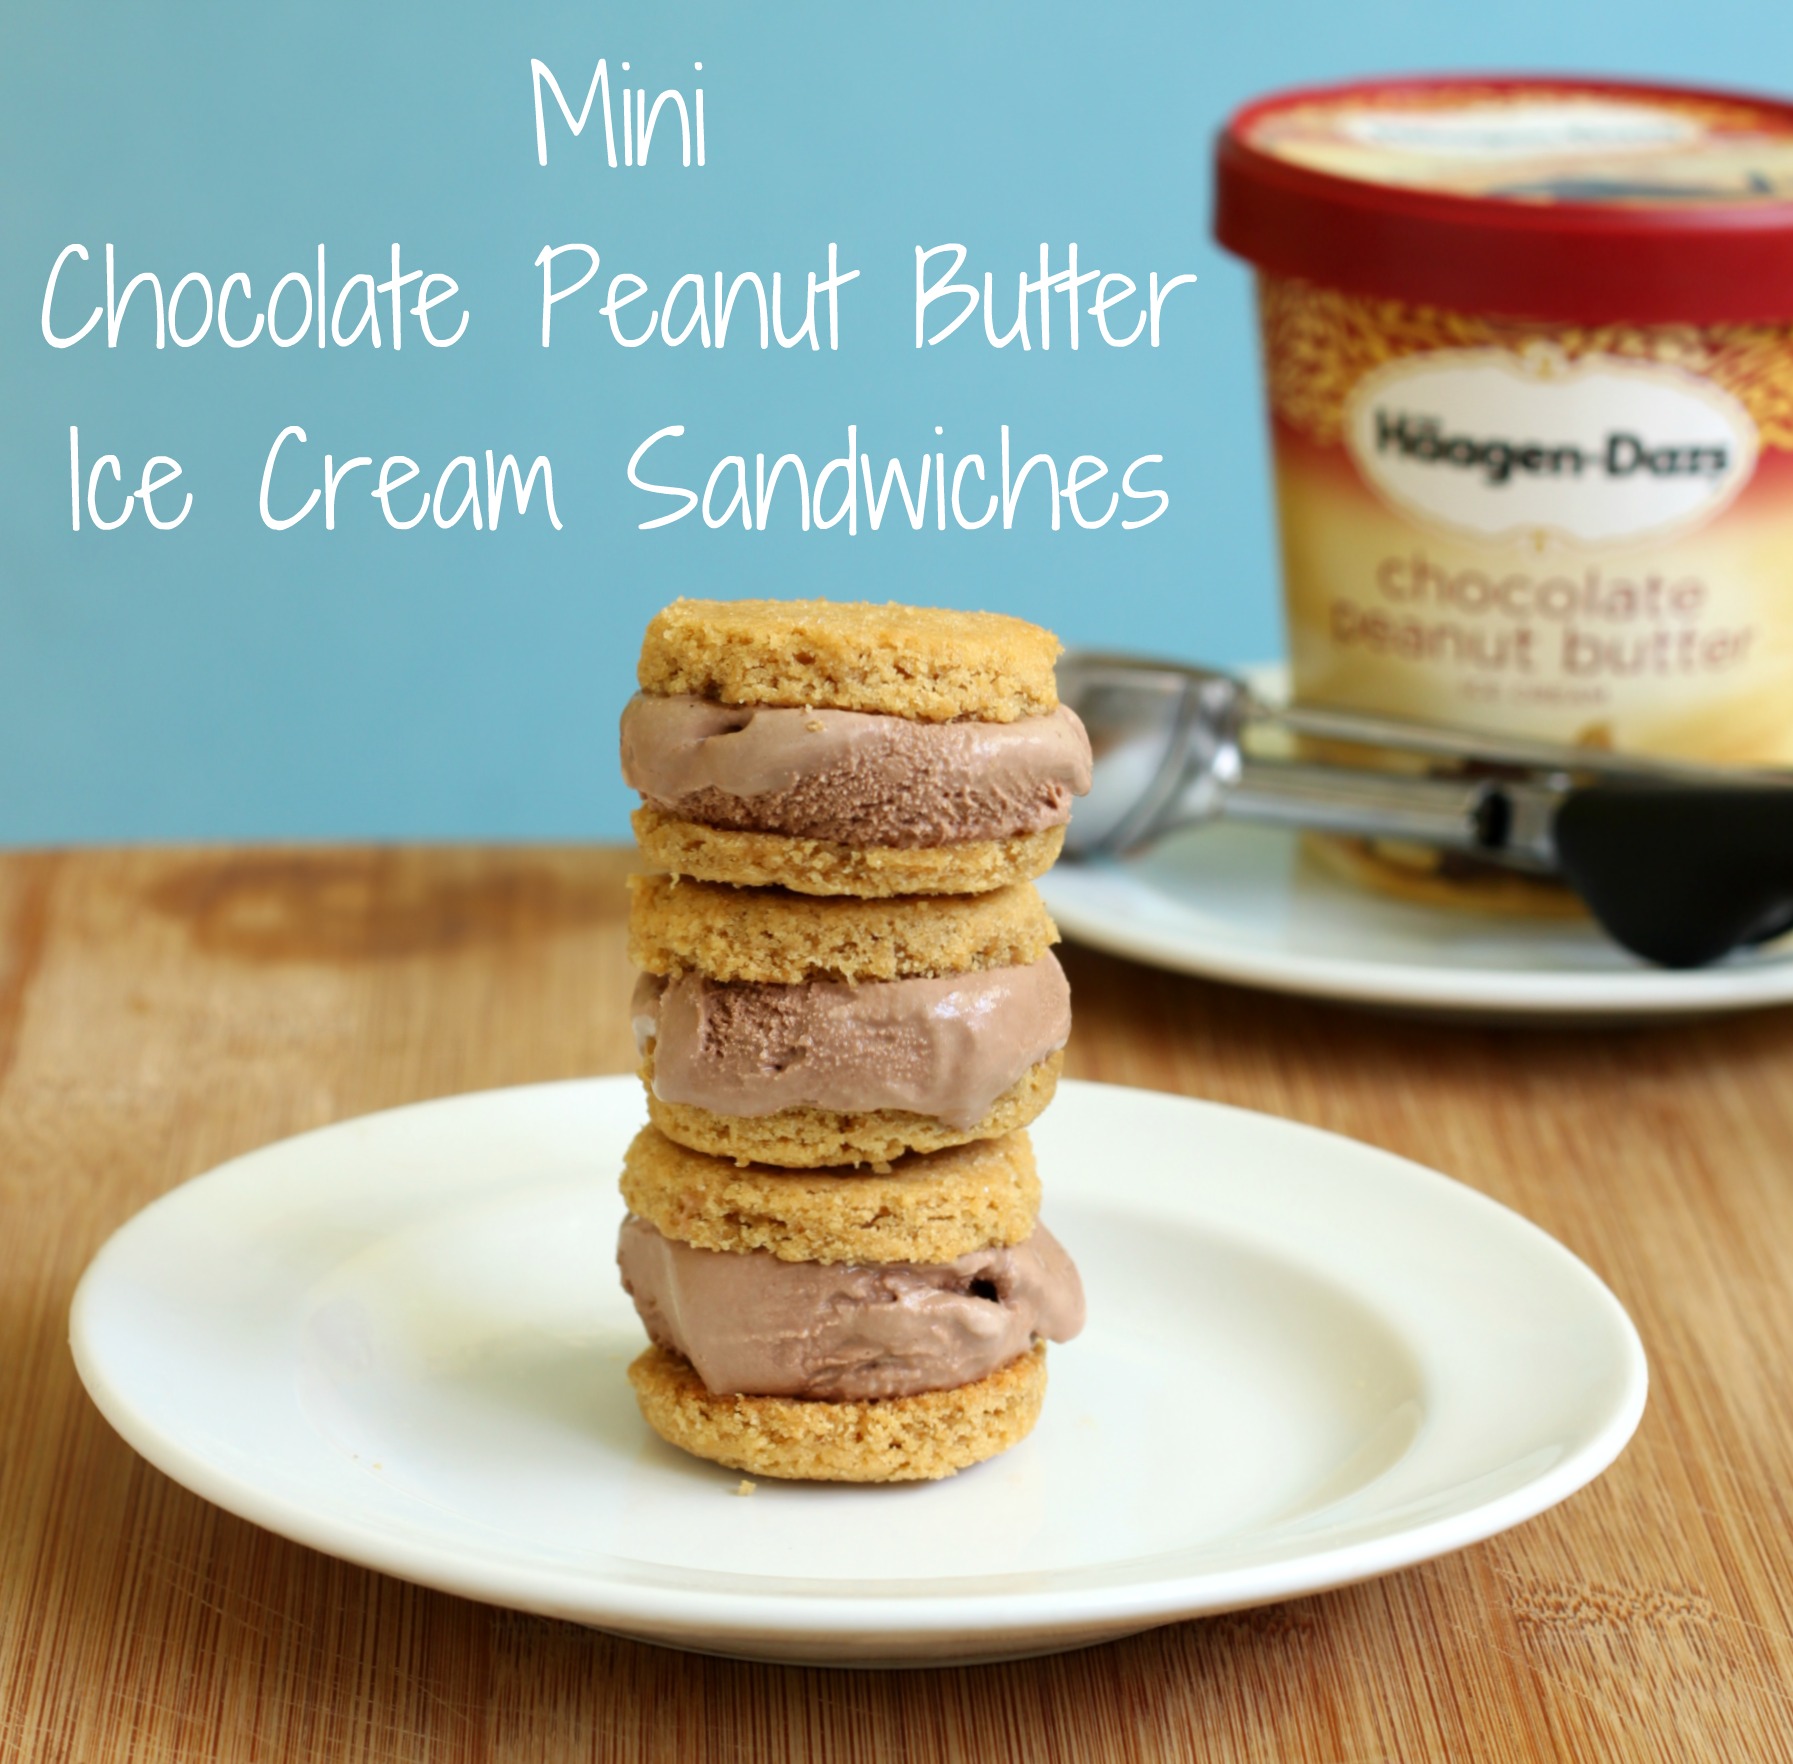 Ice Cream Sandwich Cake Recipe With Peanut Butter